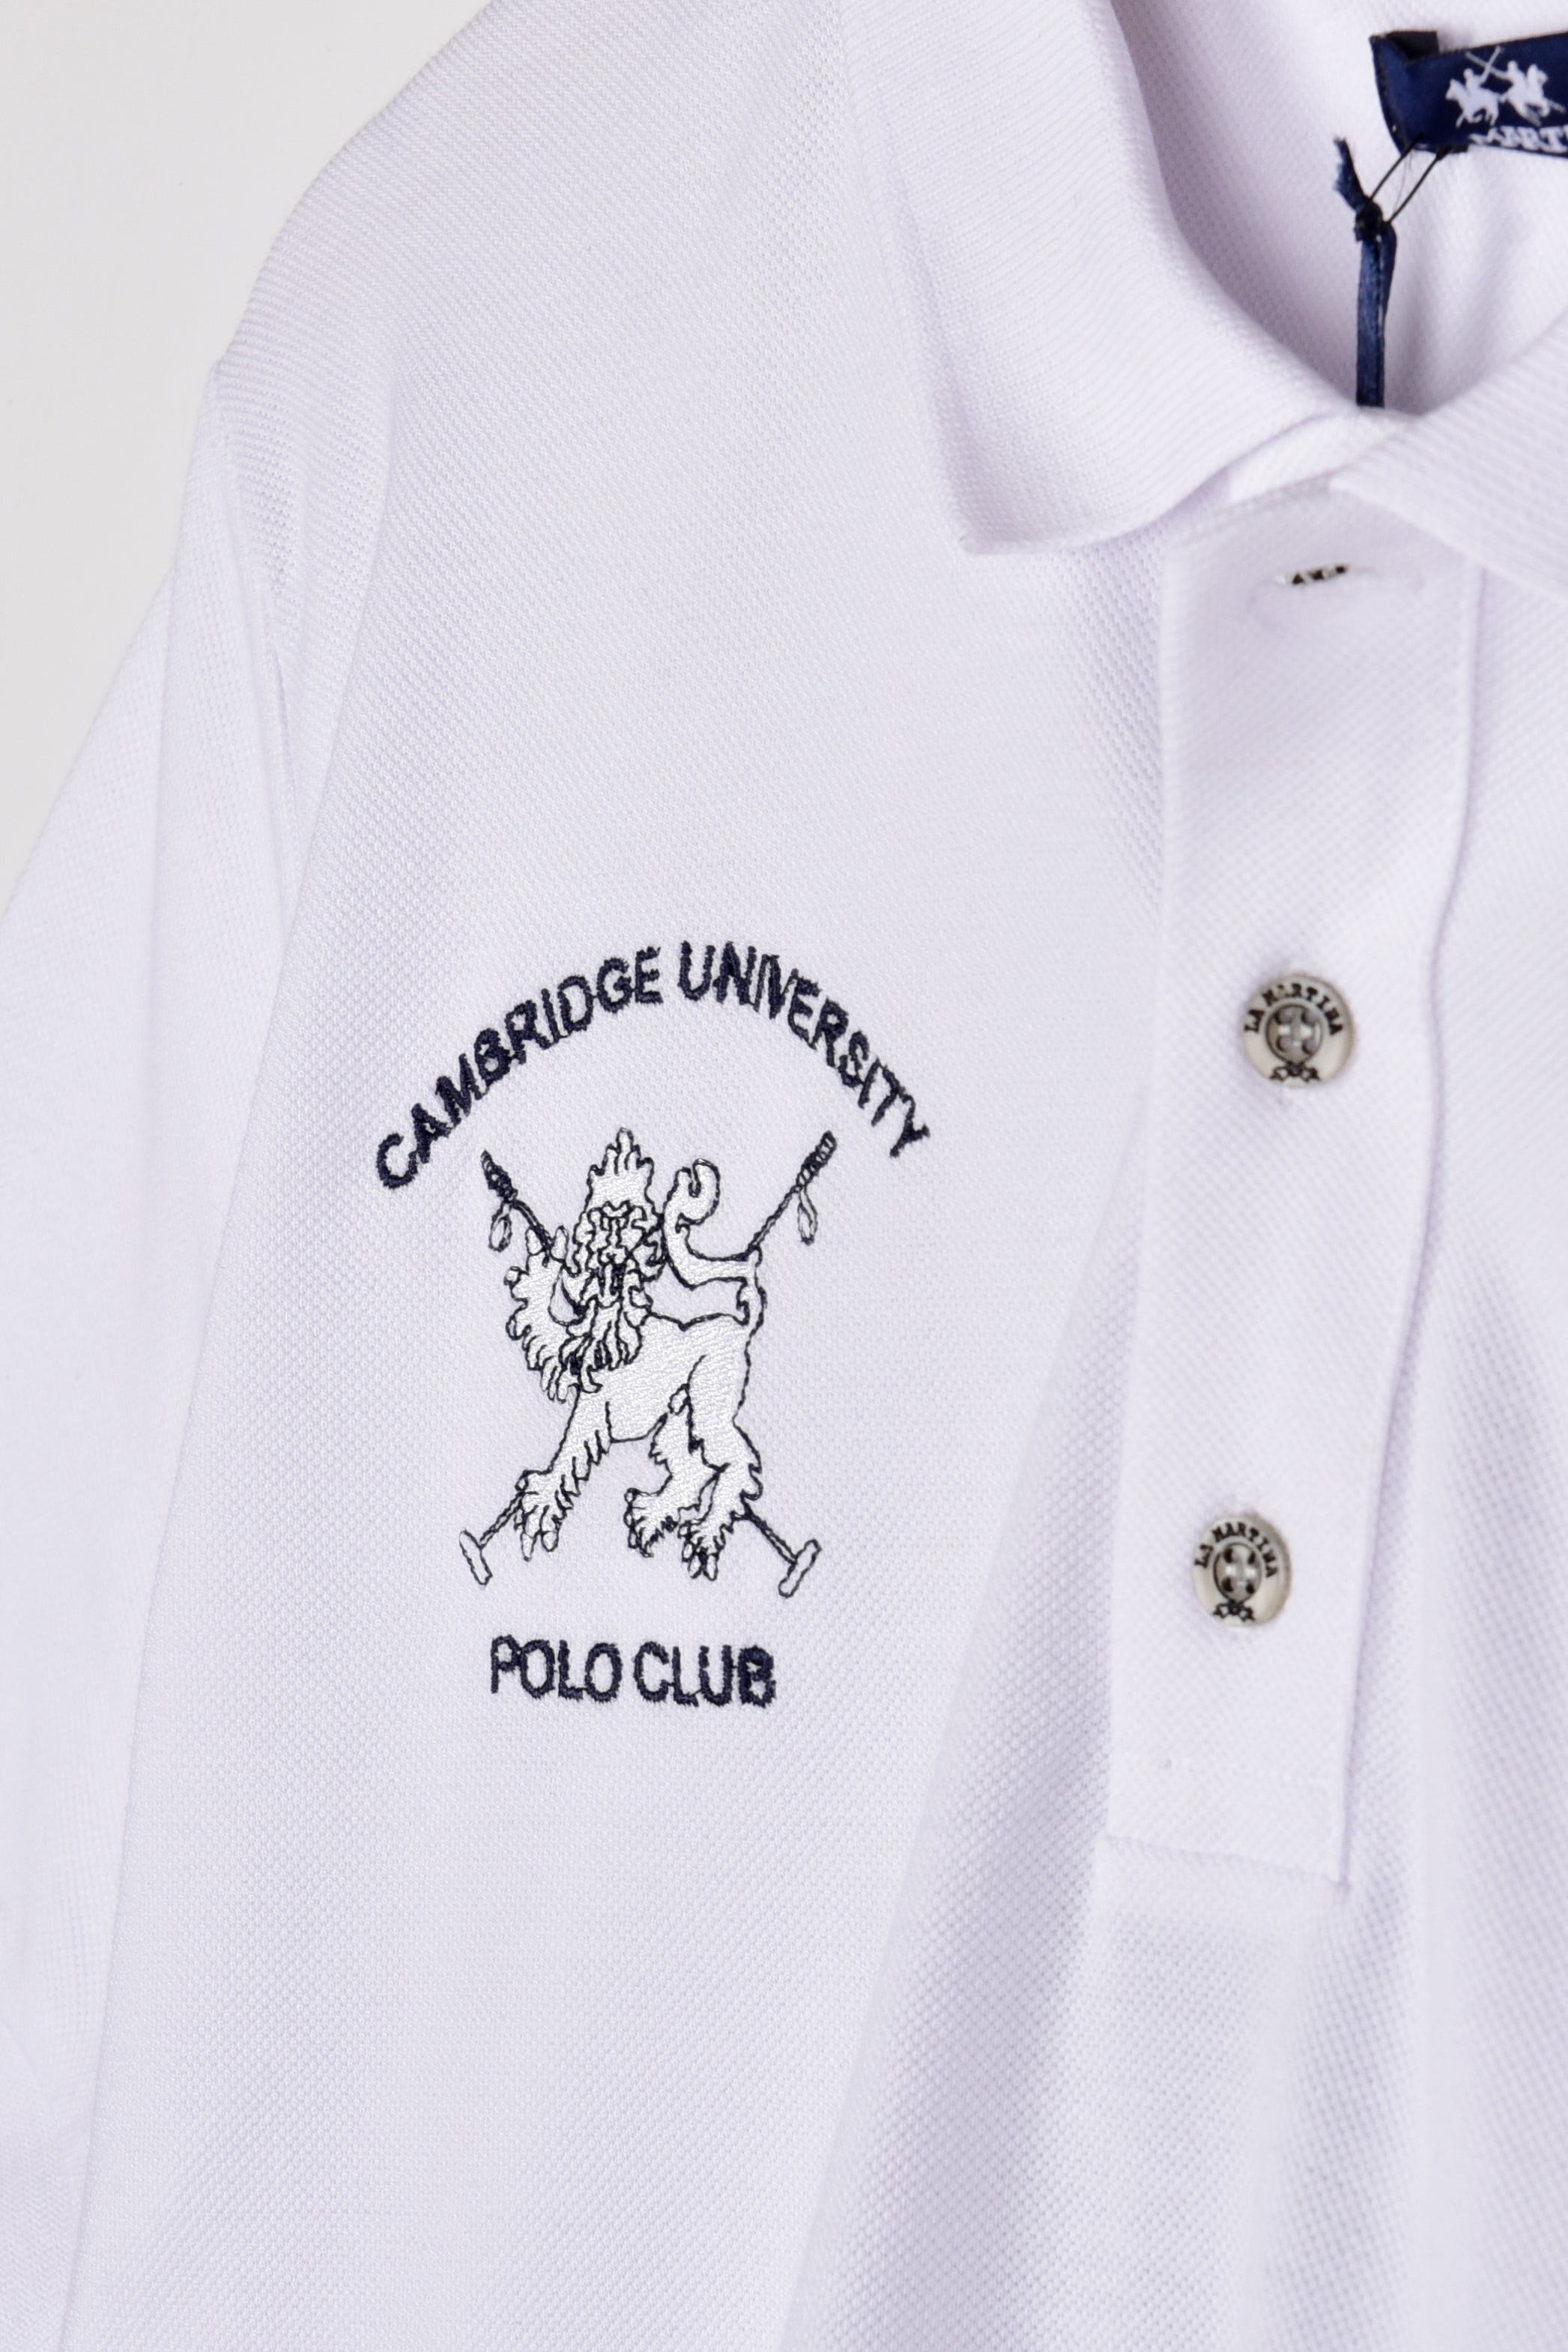 Cambridge Polo Club Polo Shirt - orangejeansco